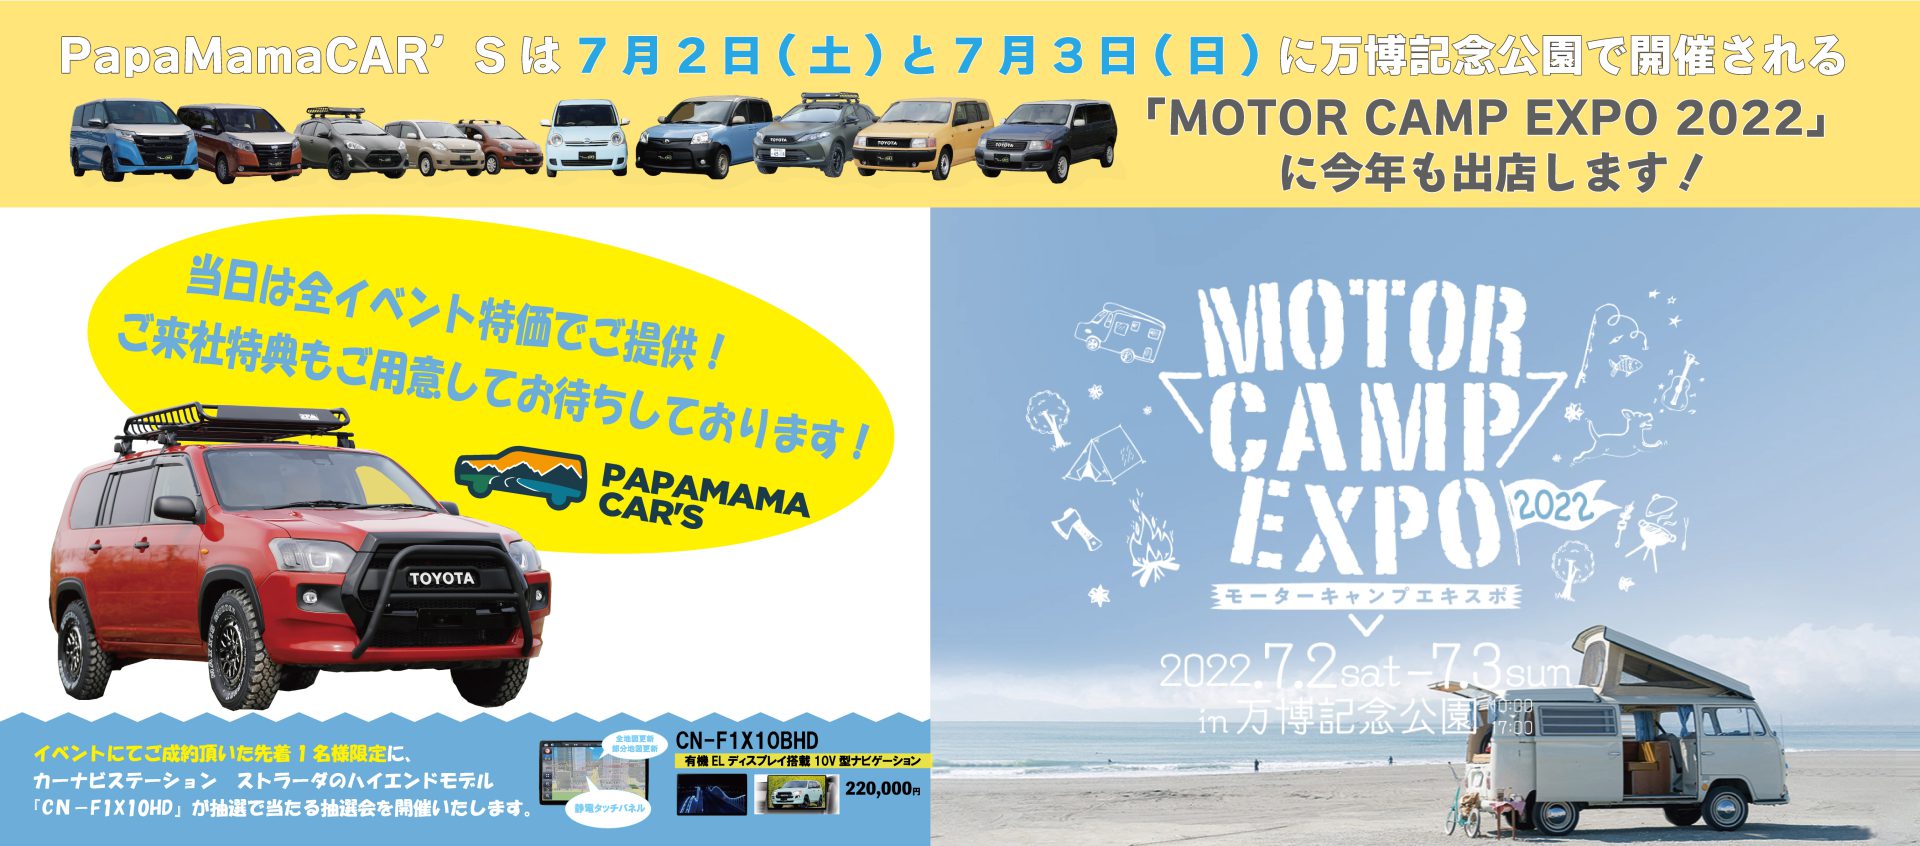 『MOTAR CANP EXPO2022』に今年も出店します！　万博でお会いしましょう♪